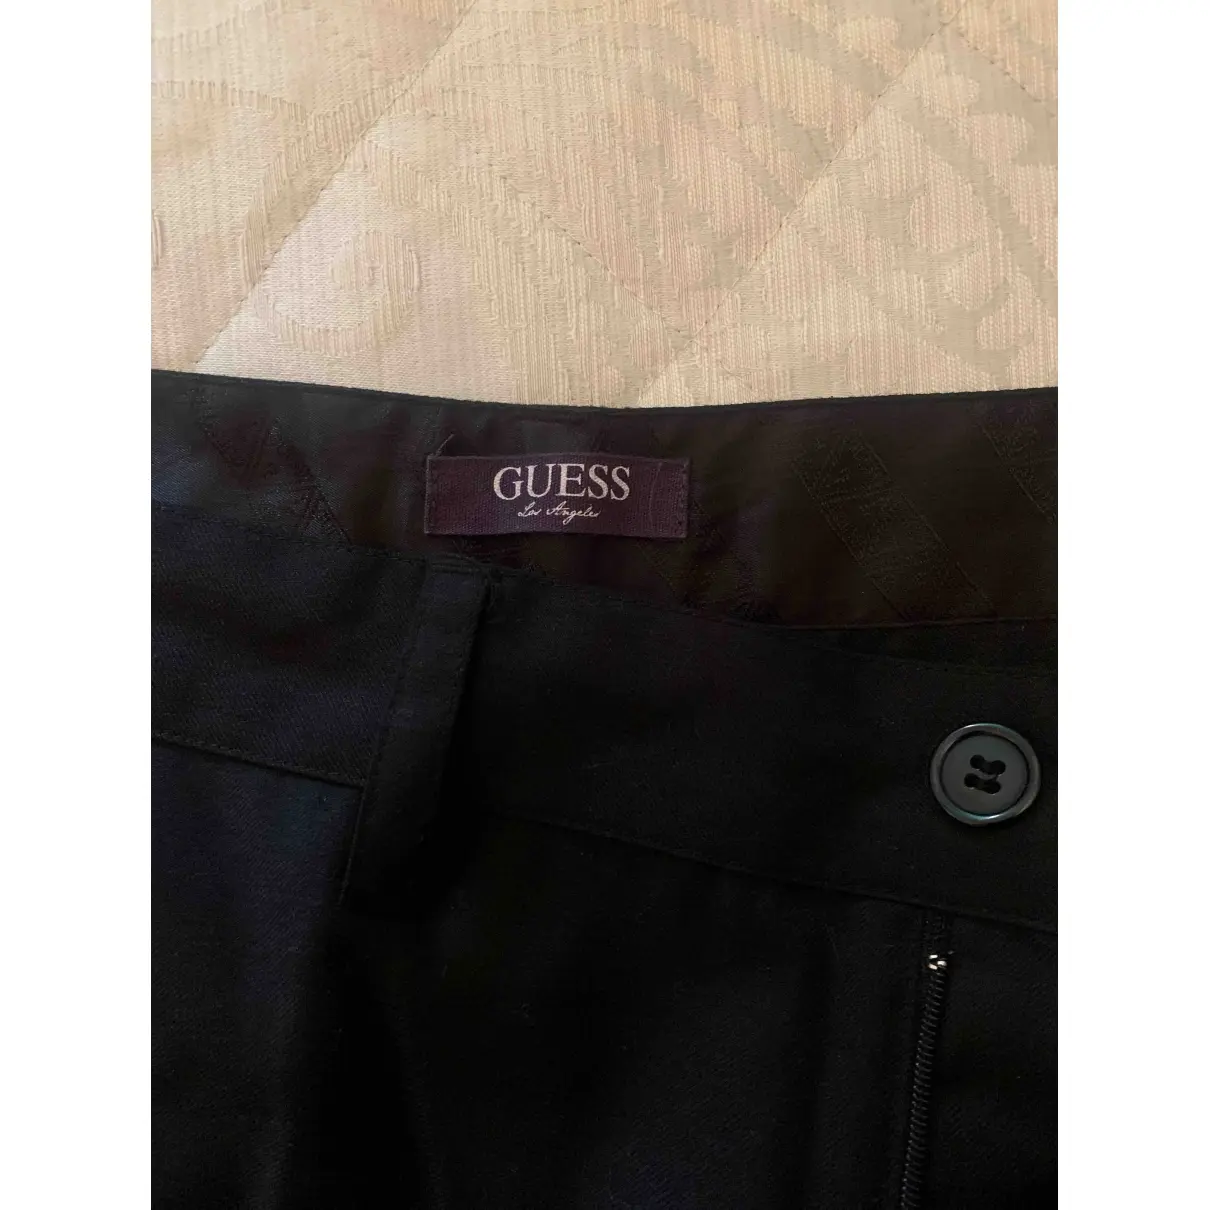 Buy GUESS Pants online